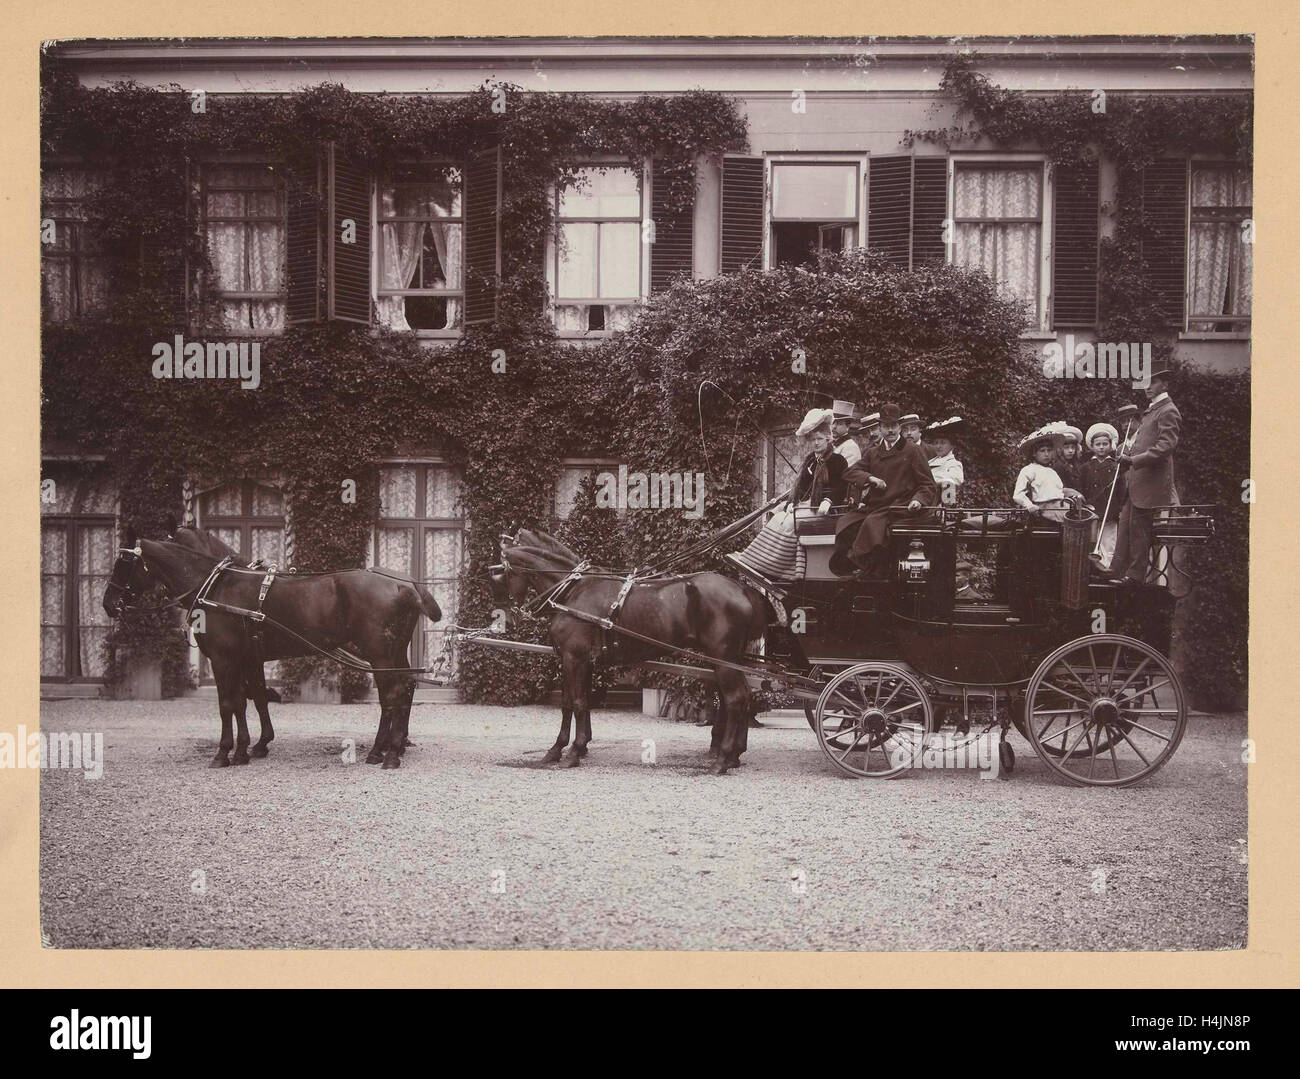 Un gruppo di persone in un carrello con quattro cavalli per paese Nimmerdor, Amersfoort, Henry Pauw van Wieldrecht, 1903 Foto Stock